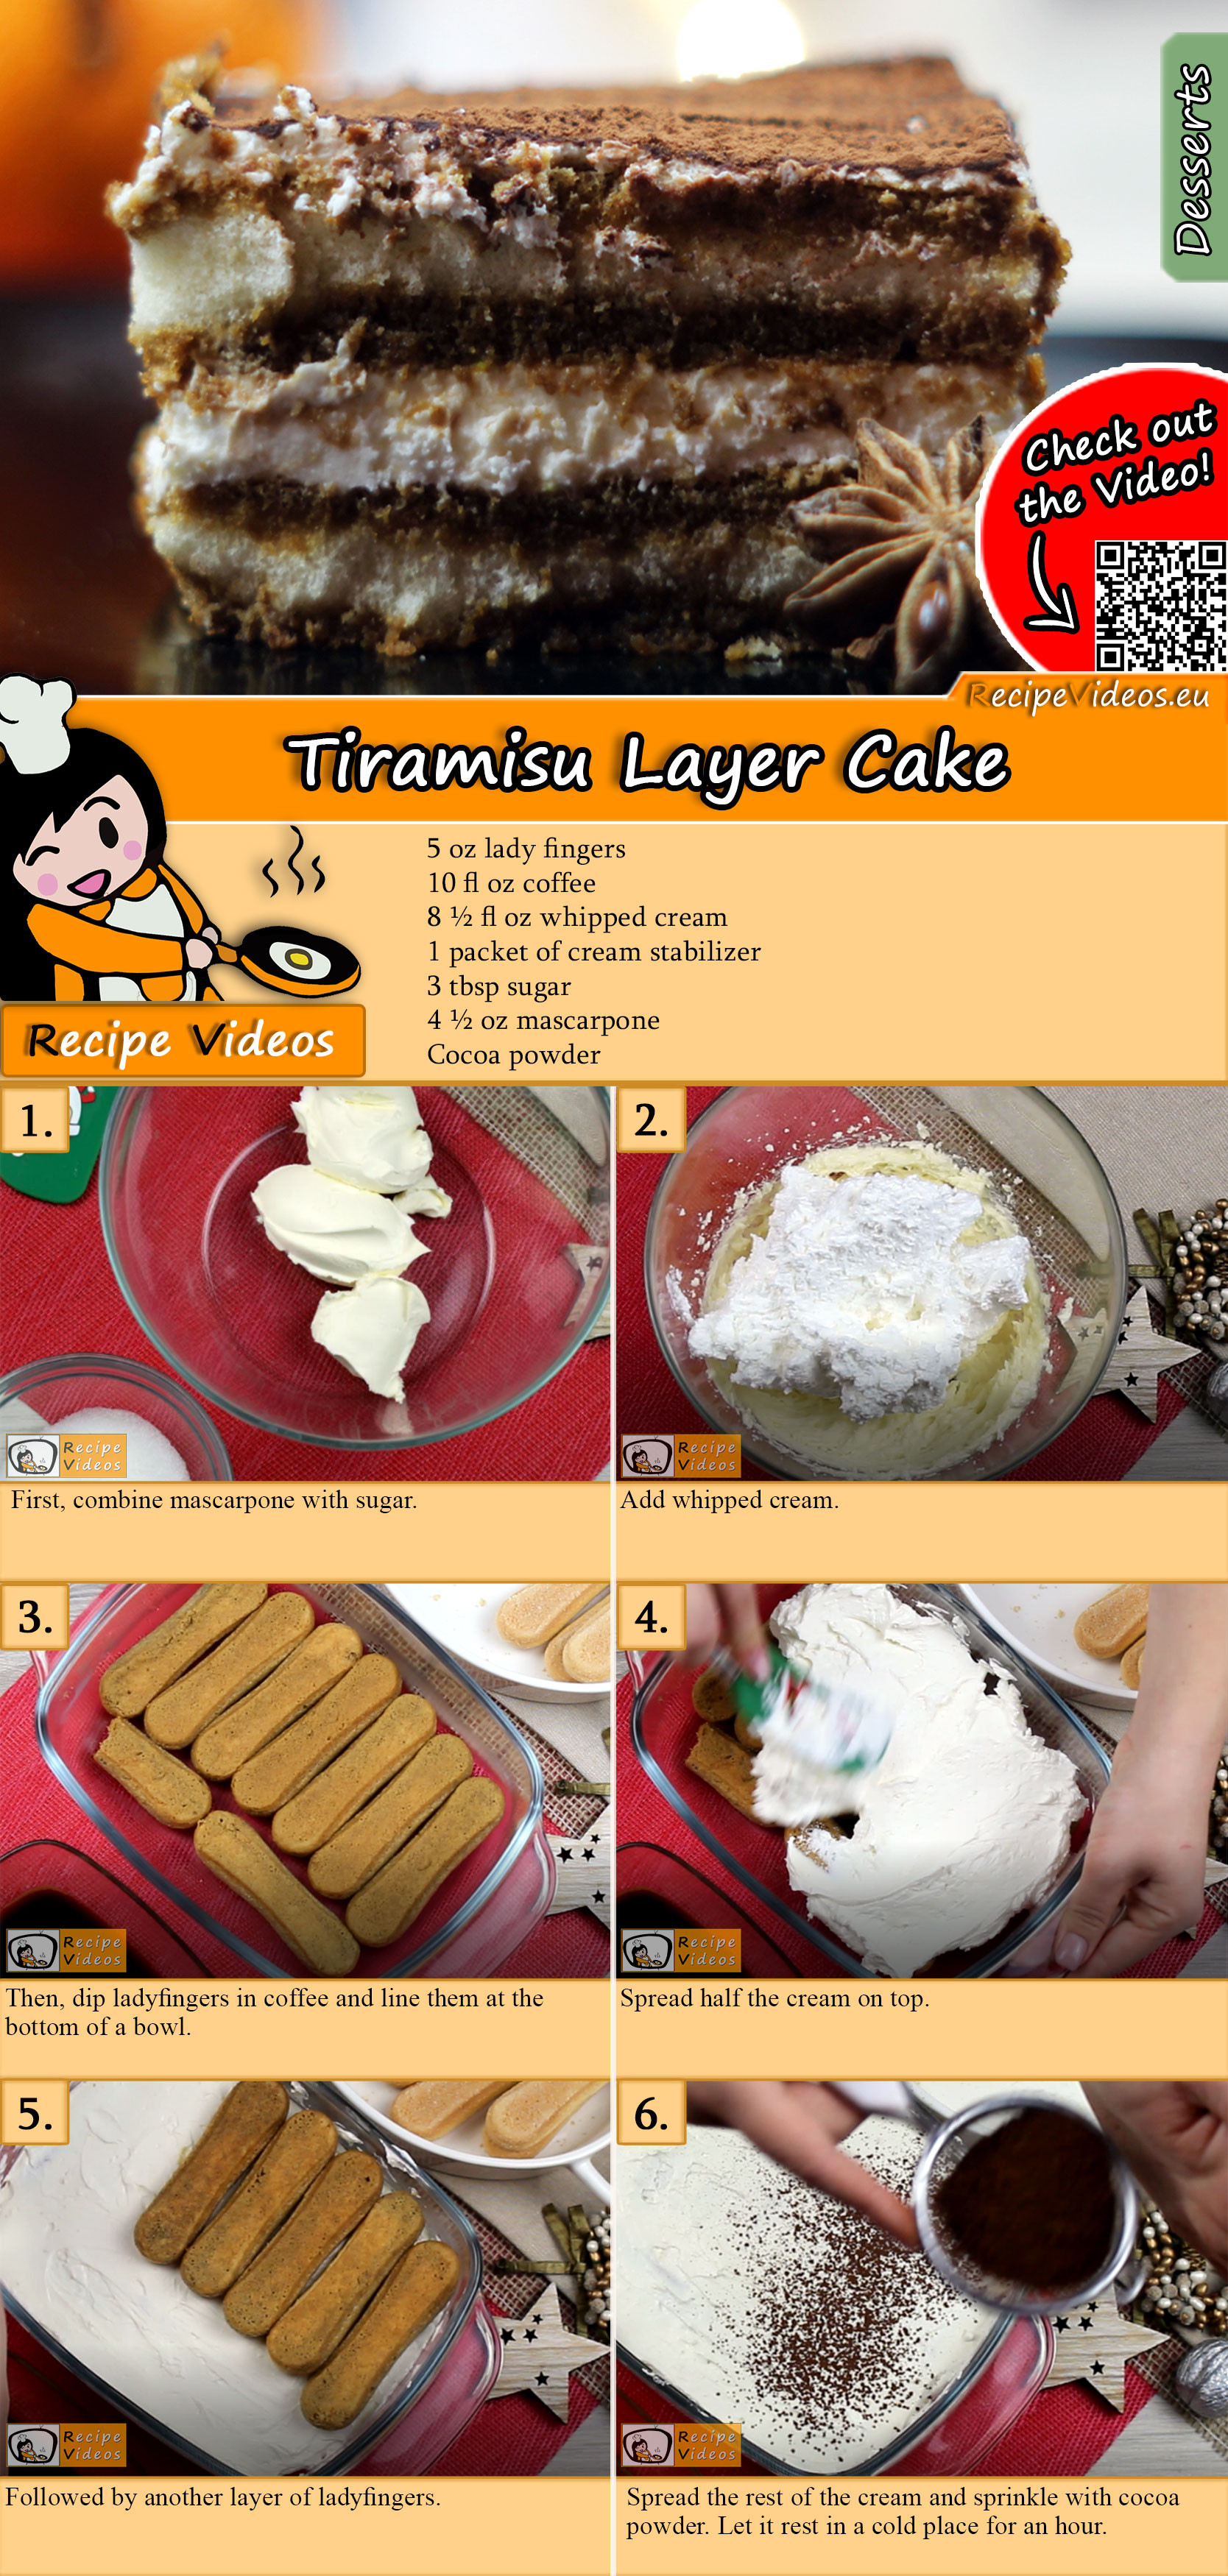 Tiramisu layer cake recipe with video